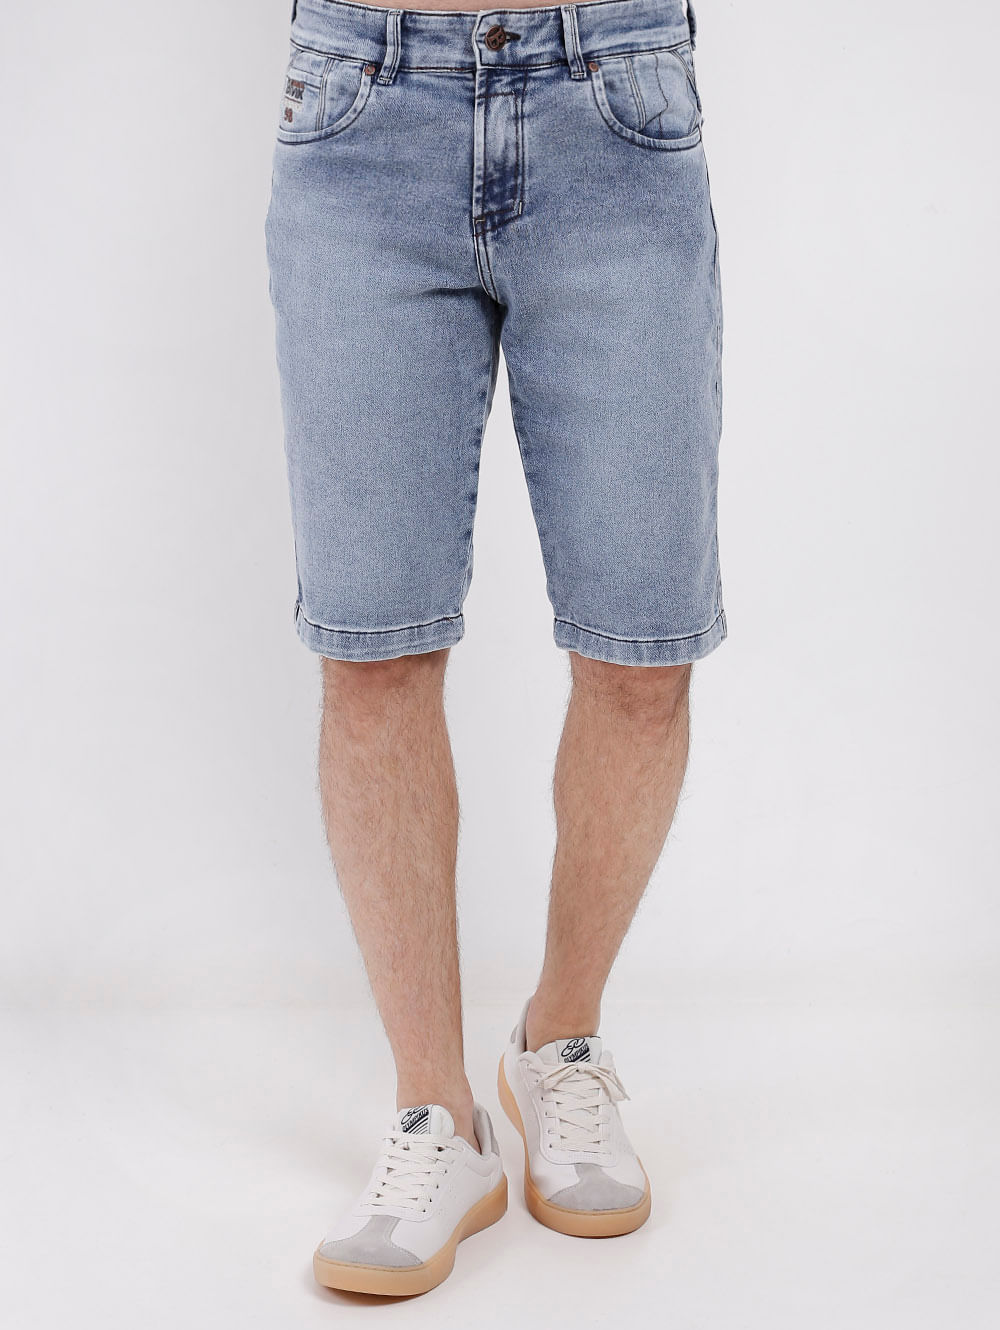 bermuda jeans moletom masculina